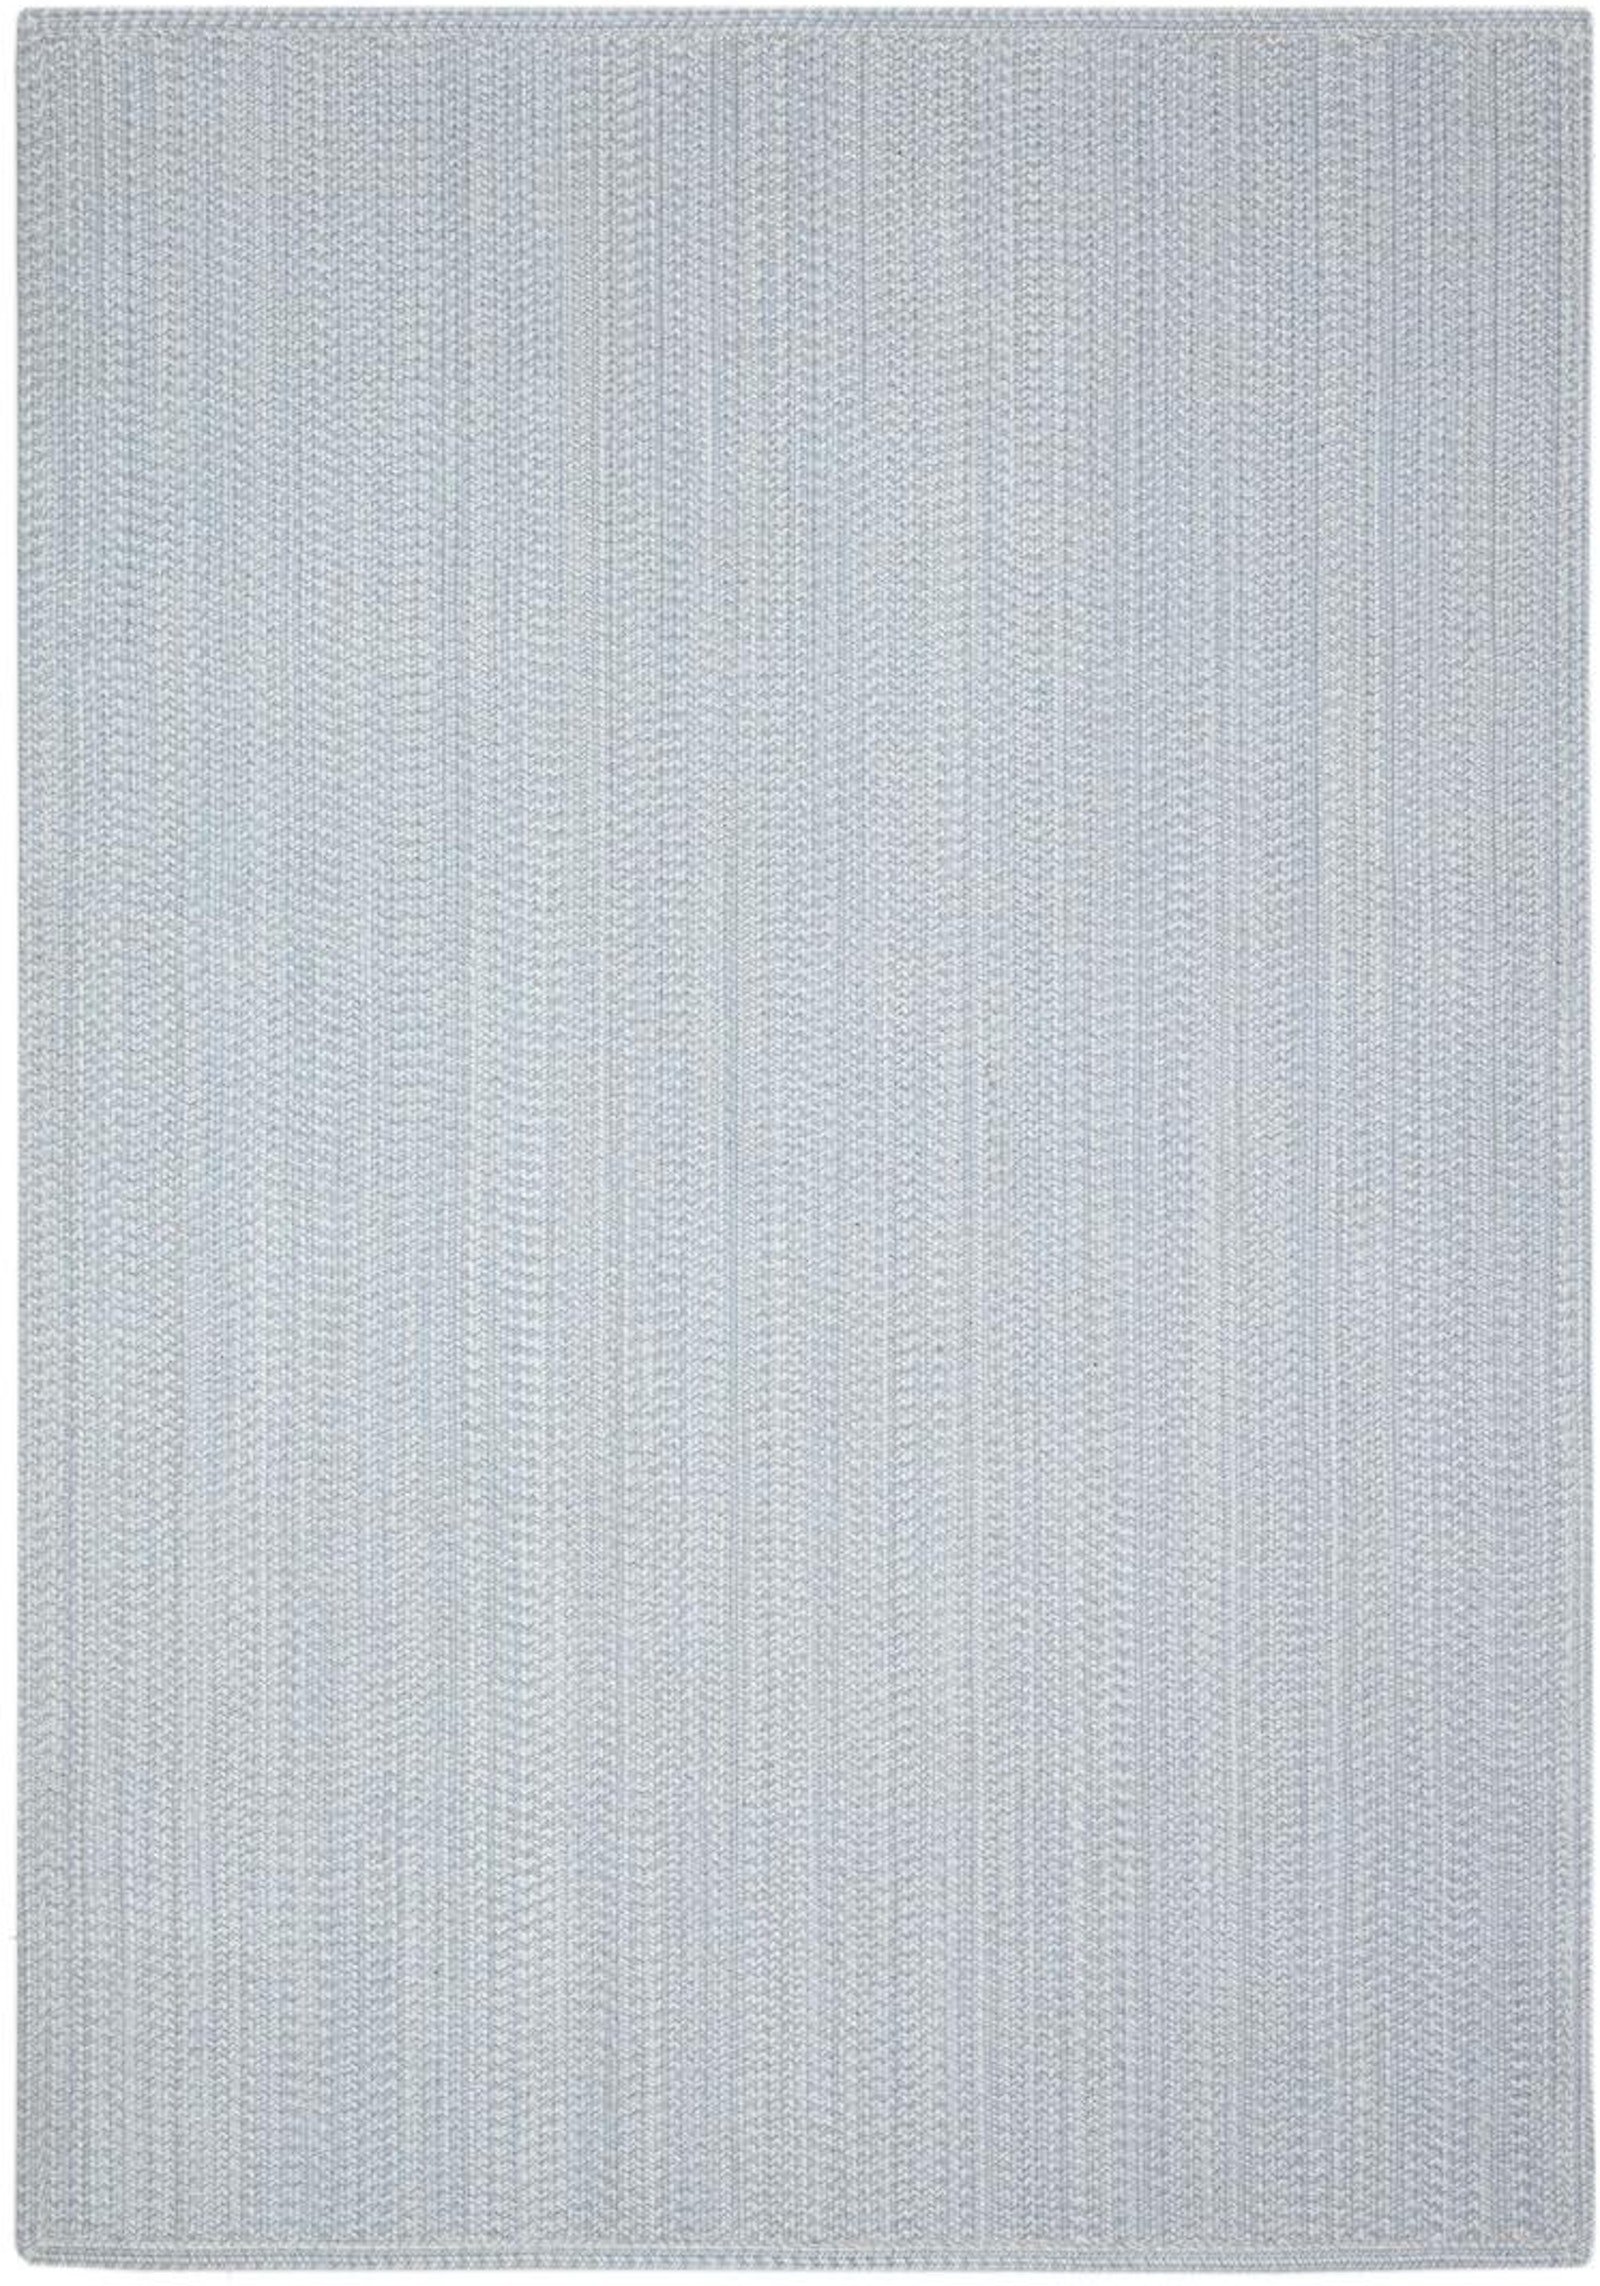 9: Portopi, Tæppe, moderne, nordisk, stof by Laforma (H: 1 cm. x B: 160 cm. x L: 230 cm., Grå)